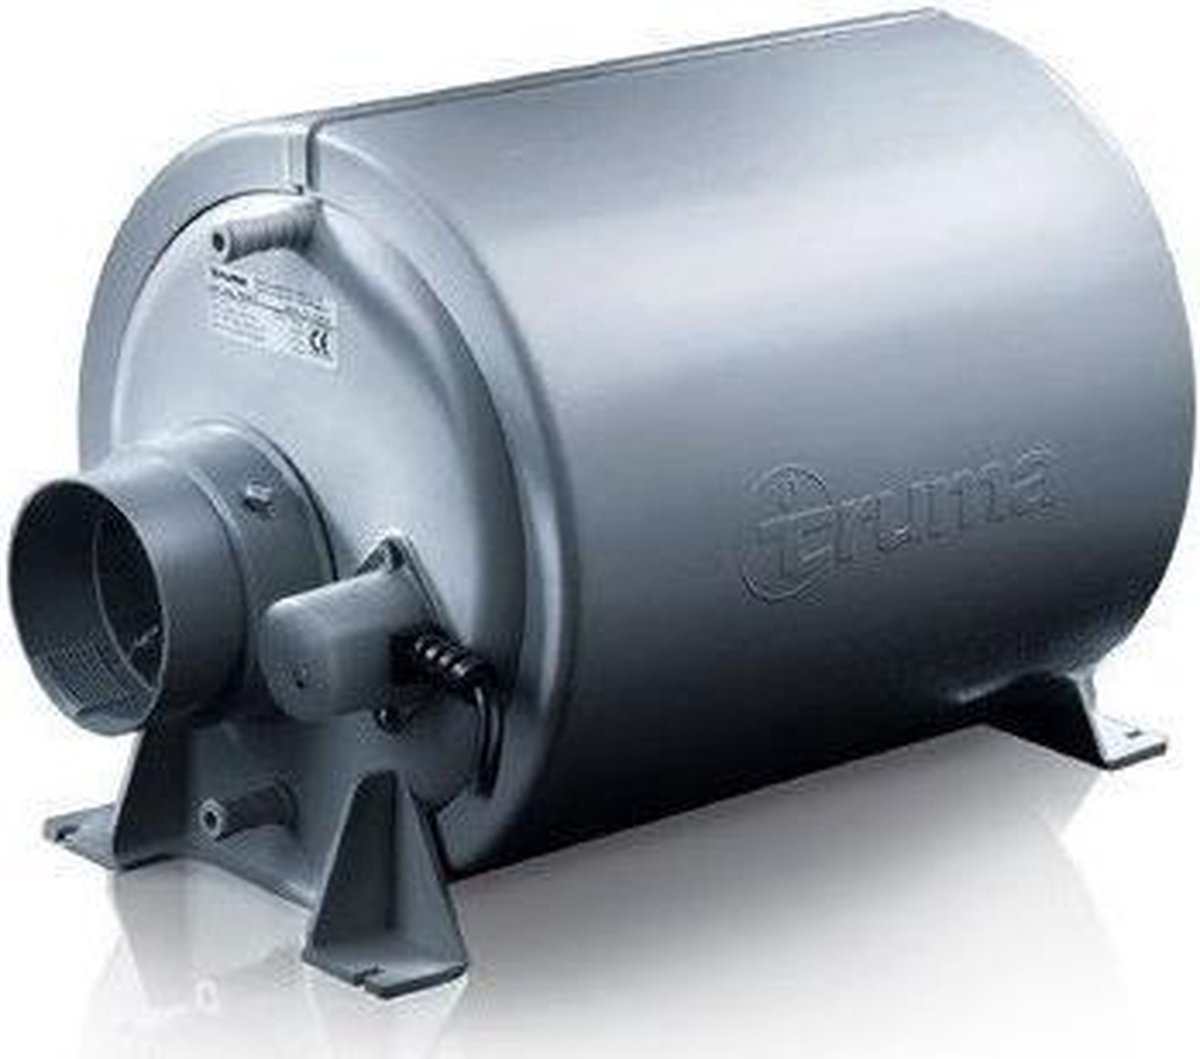 Therme 2 Truma boiler (5 liter)